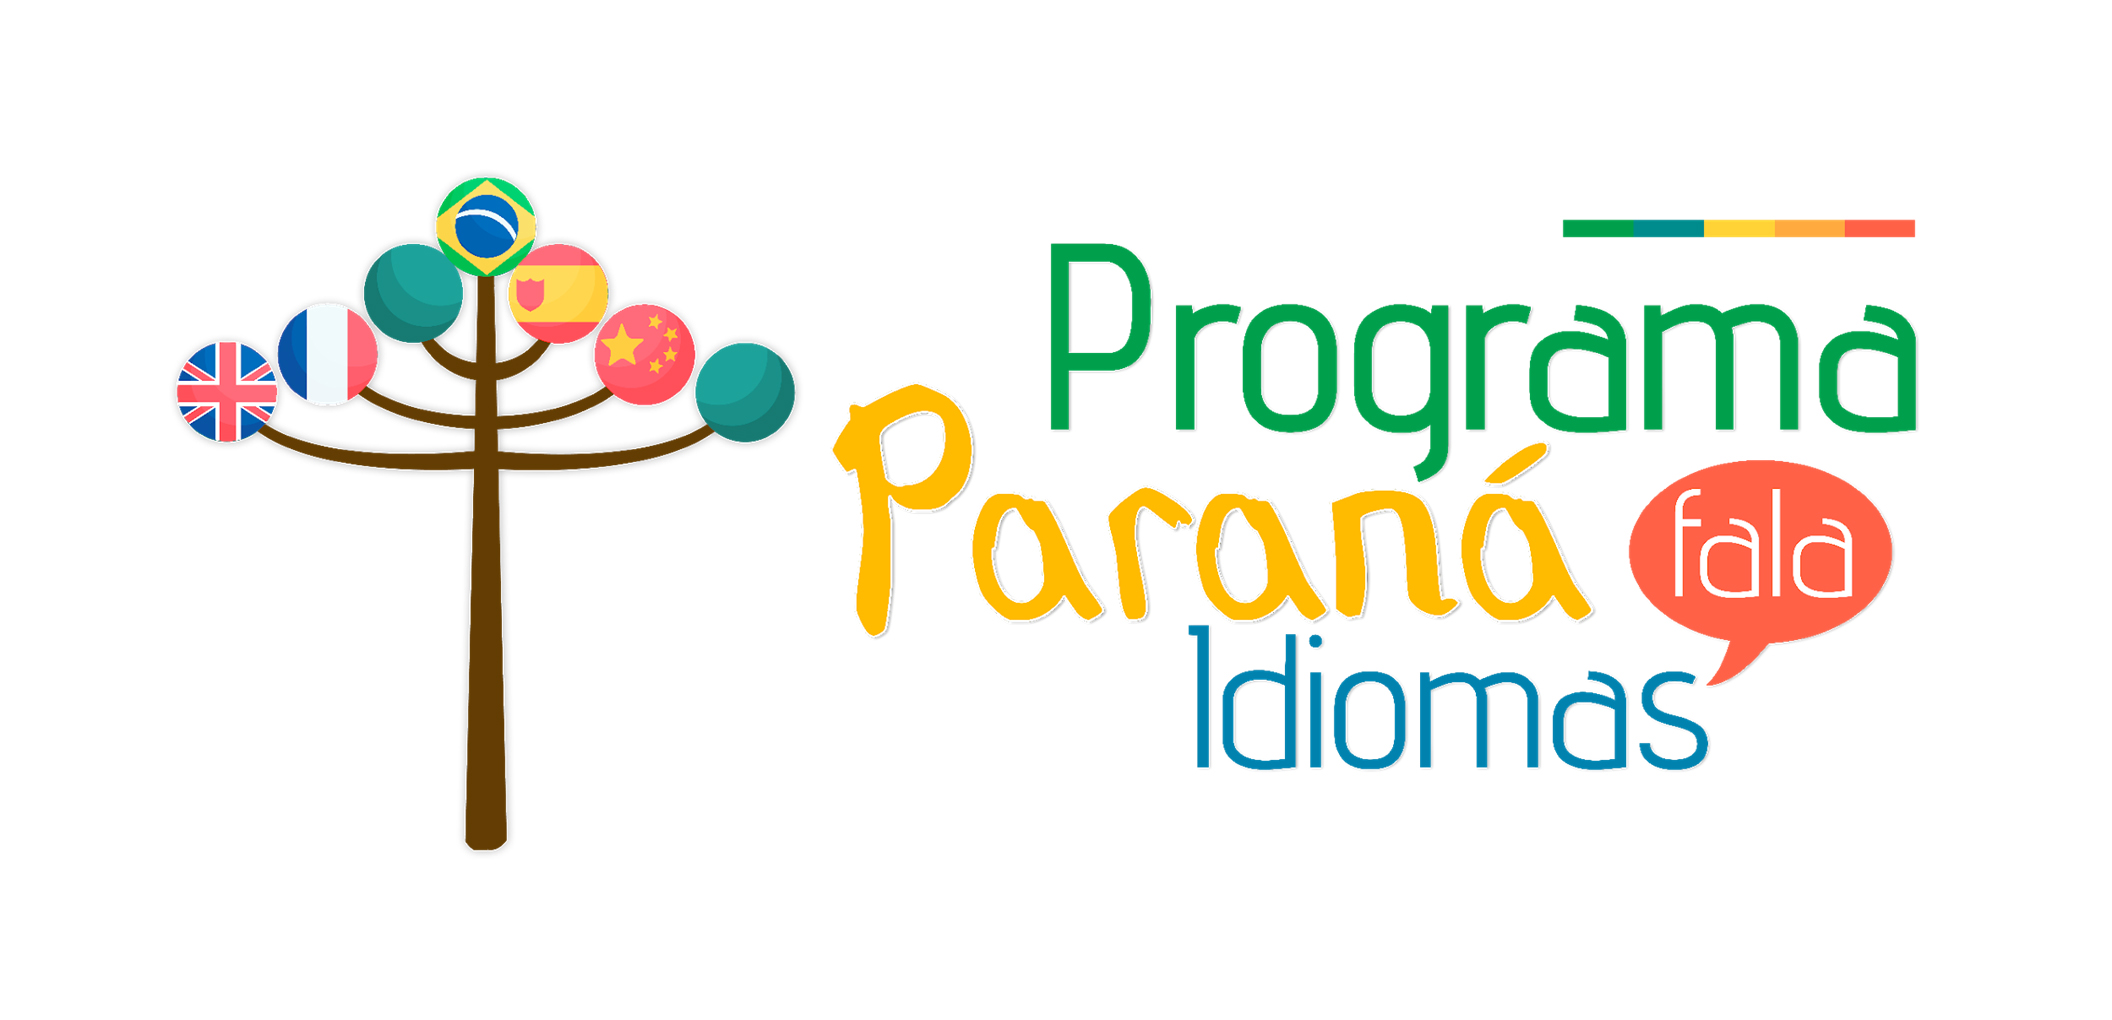 PFI Idiomas Ingles logo 2020